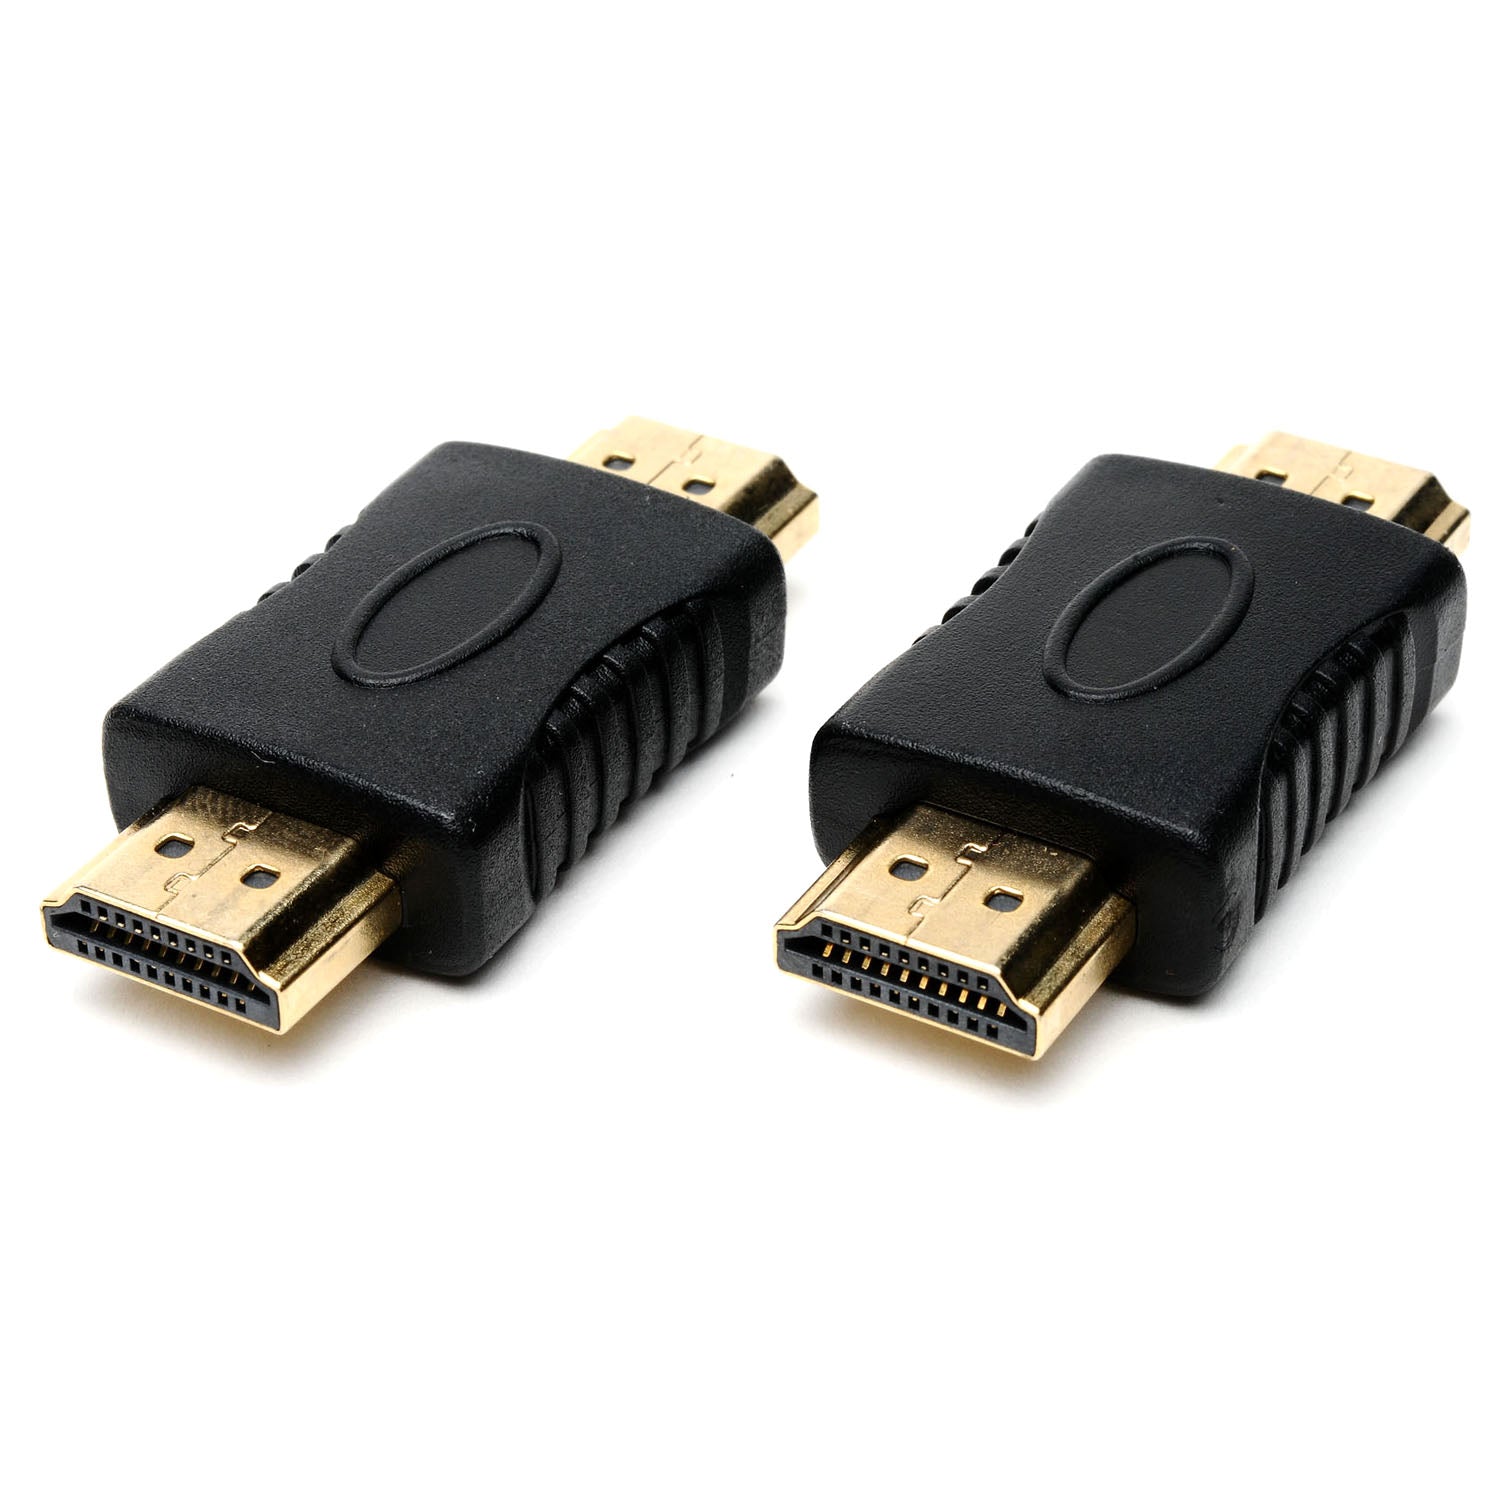 5-AD1014 HDMI Male to Male Gold